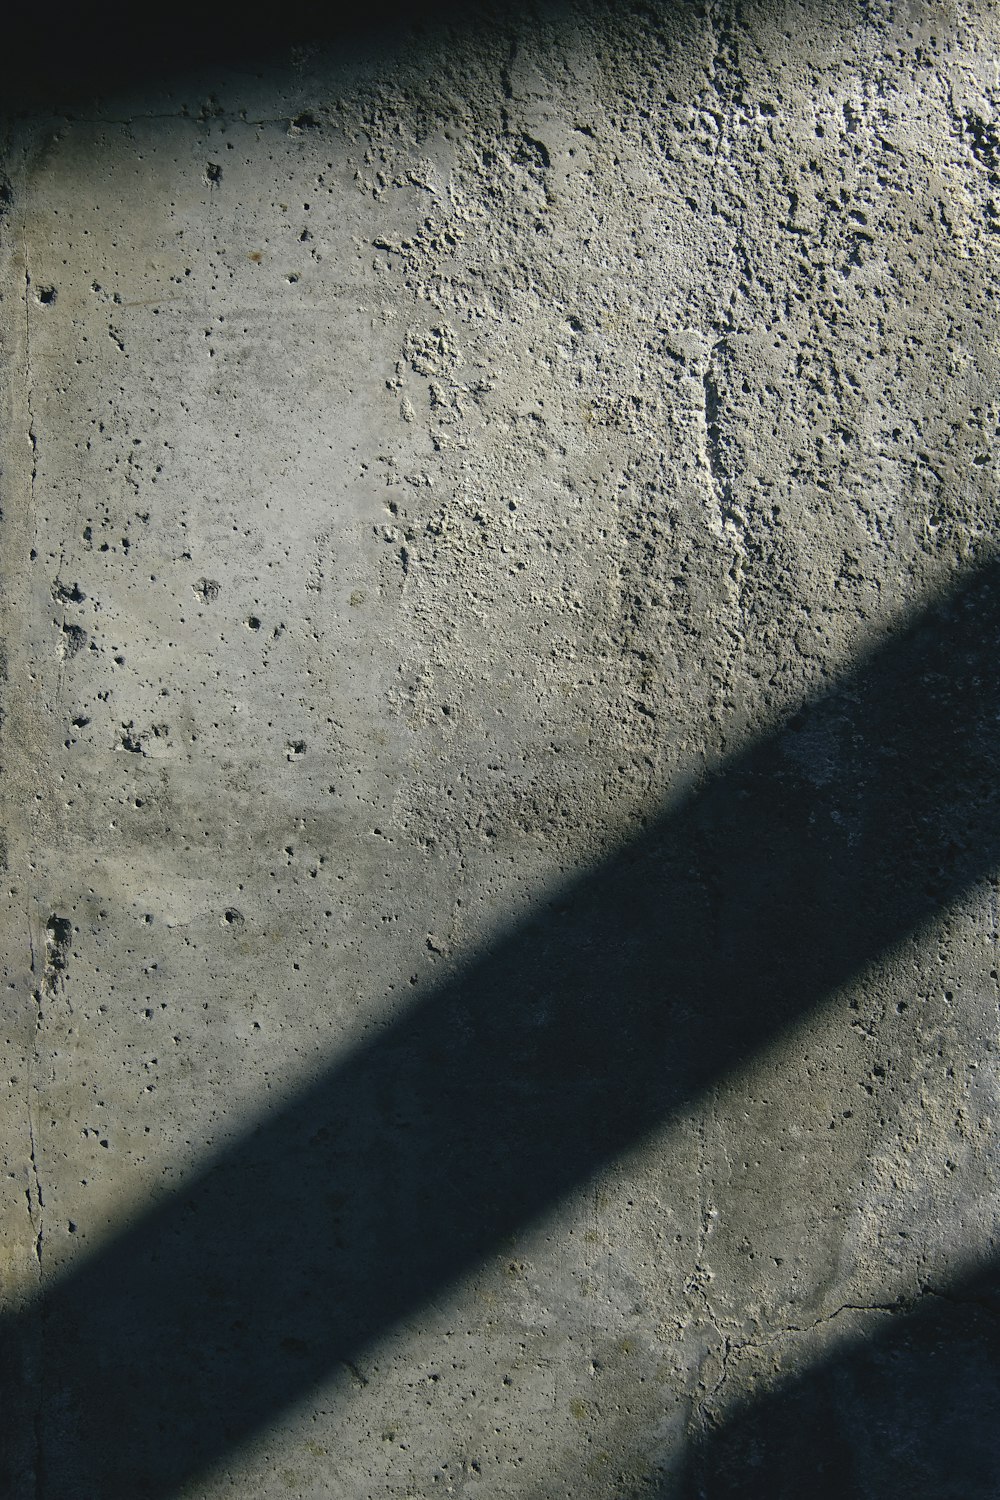 black metal bar on gray concrete floor